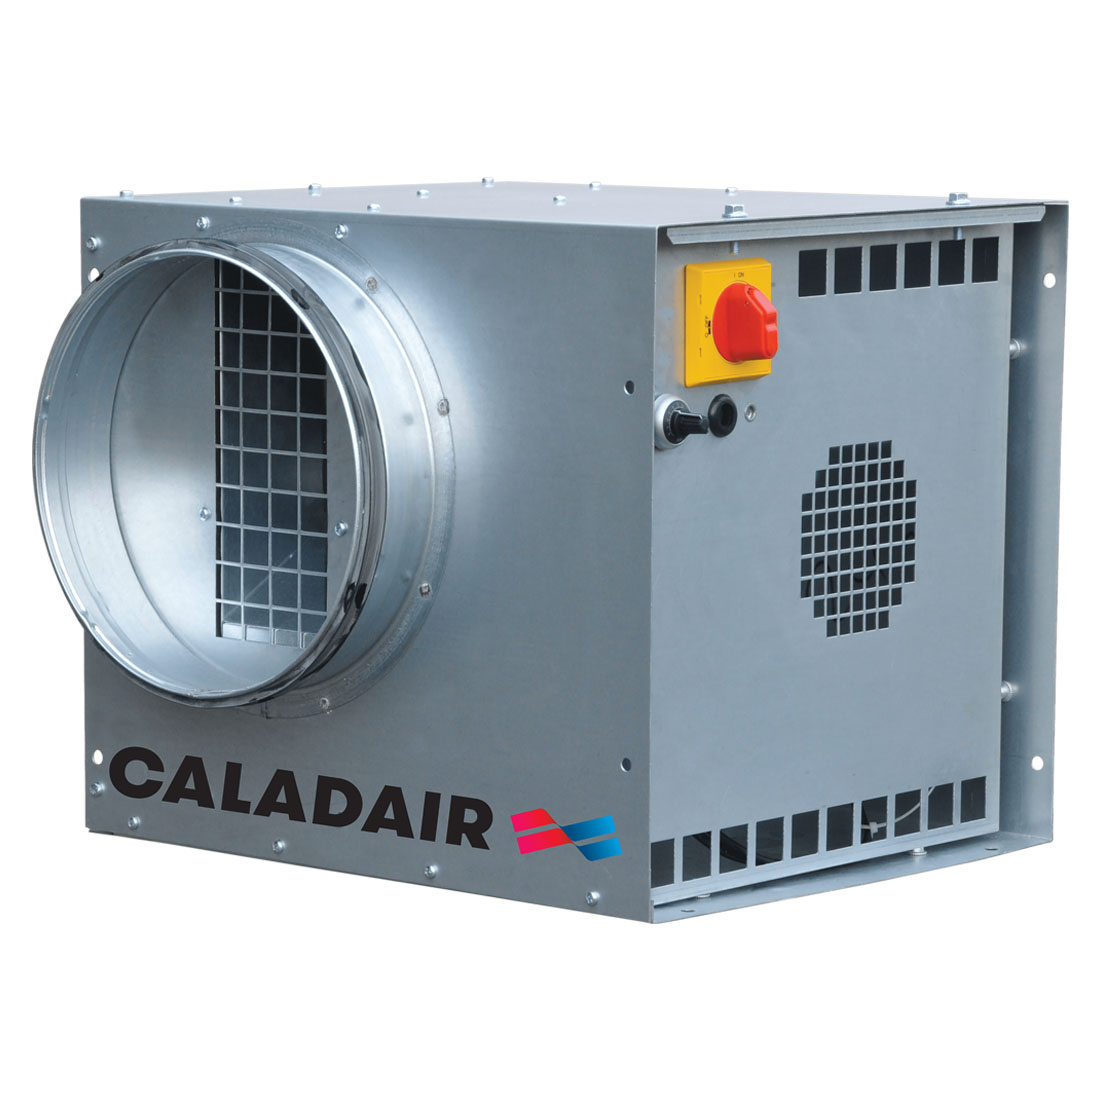 Zehnder-caladair-econizer-extract-box-fan-bpc-ventilation